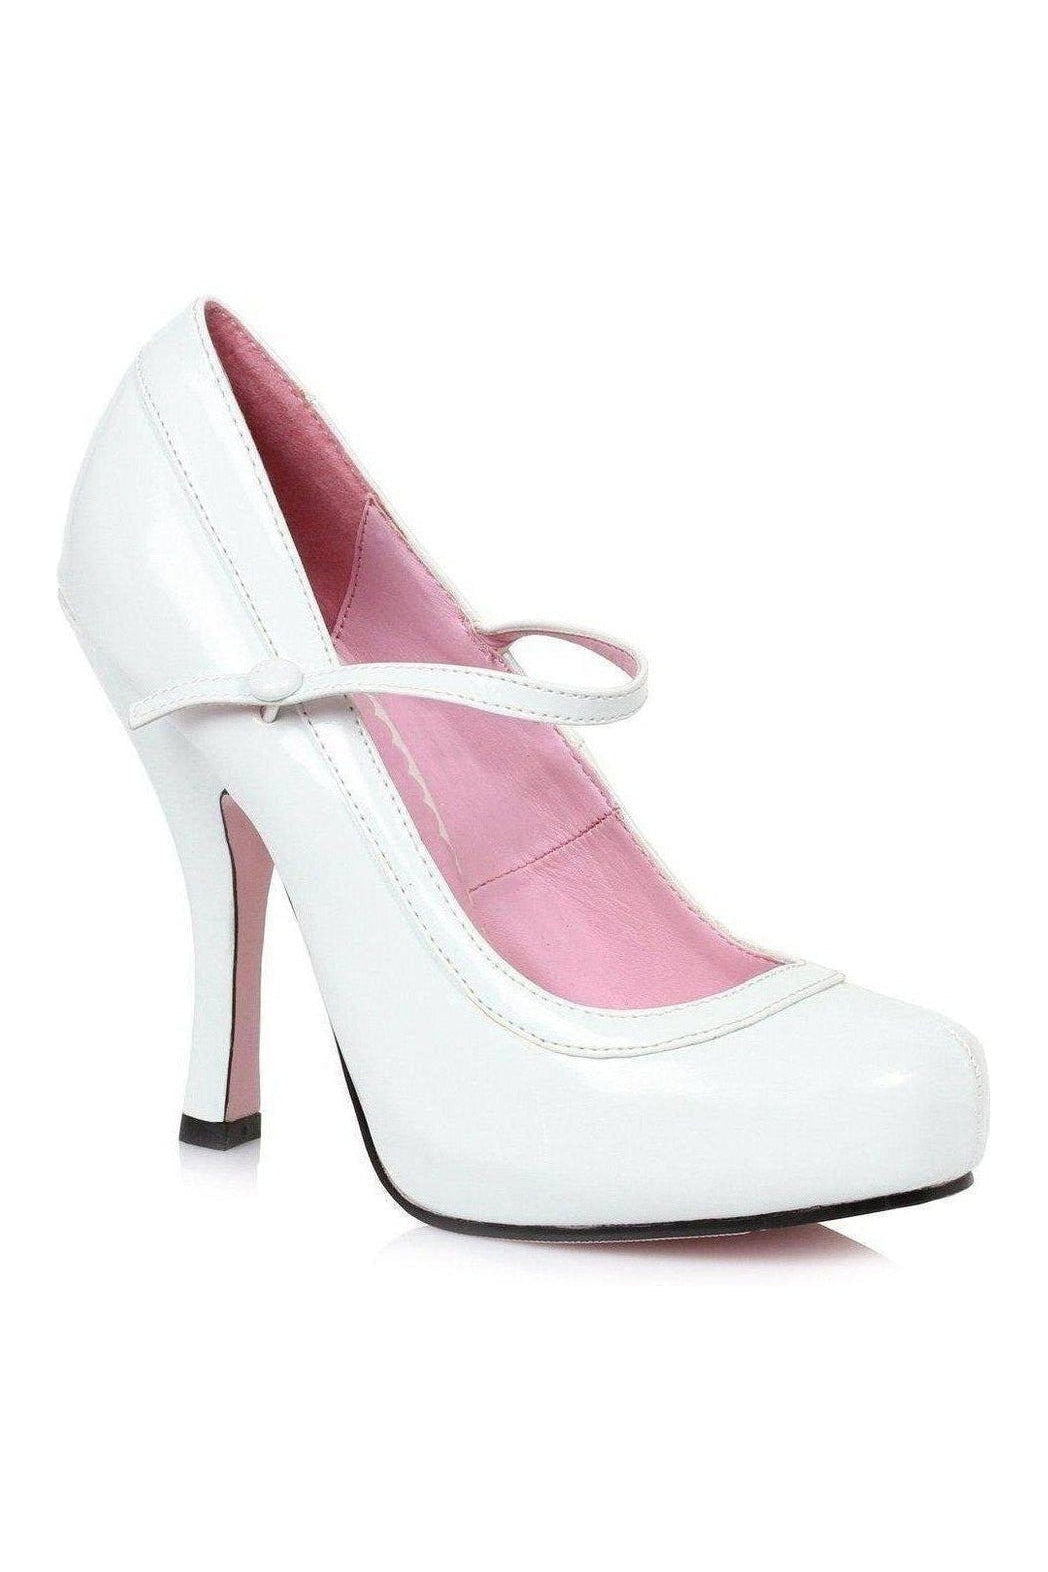 423-BABYDOLL Costume Pump | White Patent-Ellie Shoes-SEXYSHOES.COM